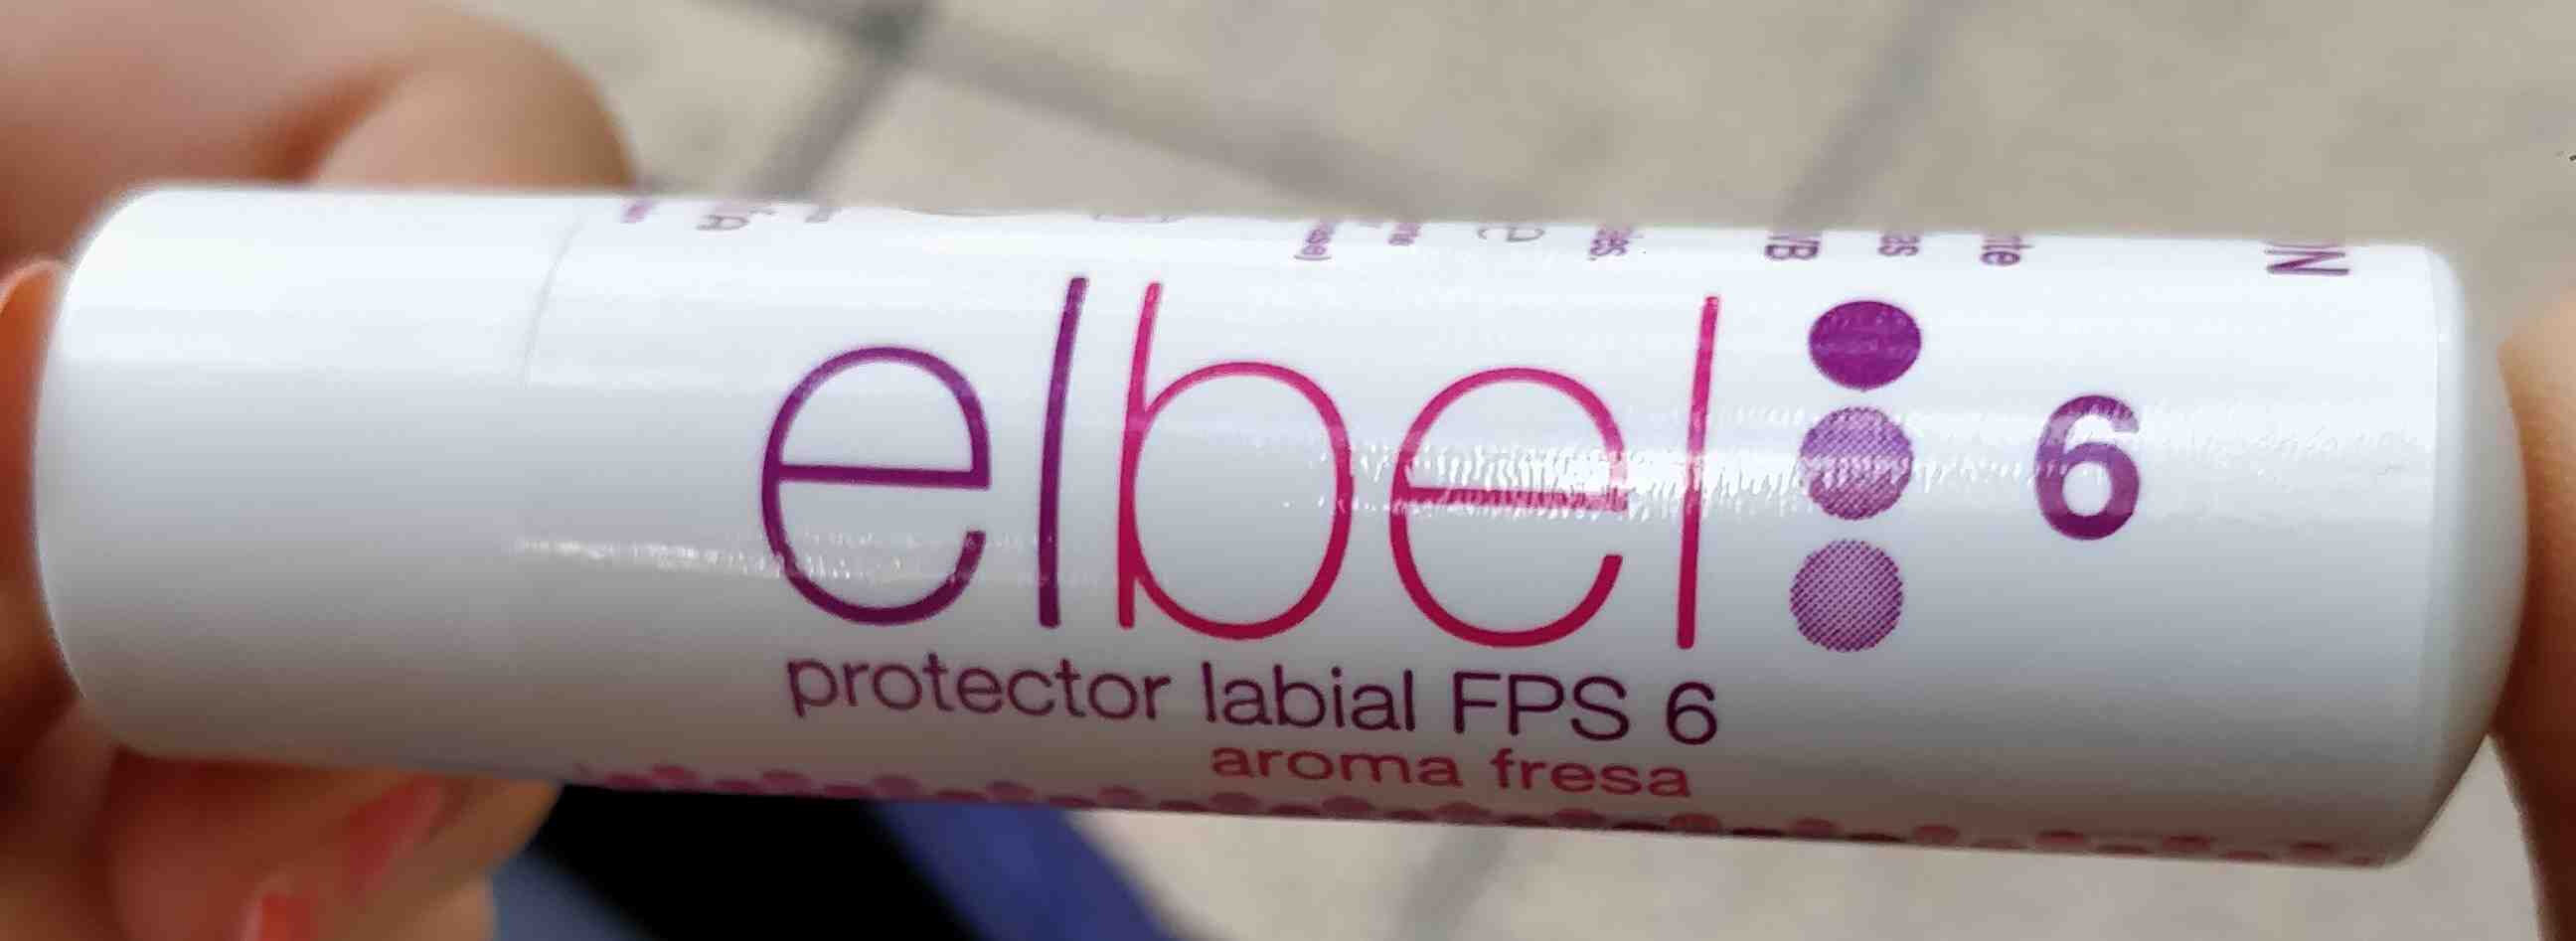 Protector labial FPS 6 aroma fresa - Produit - en